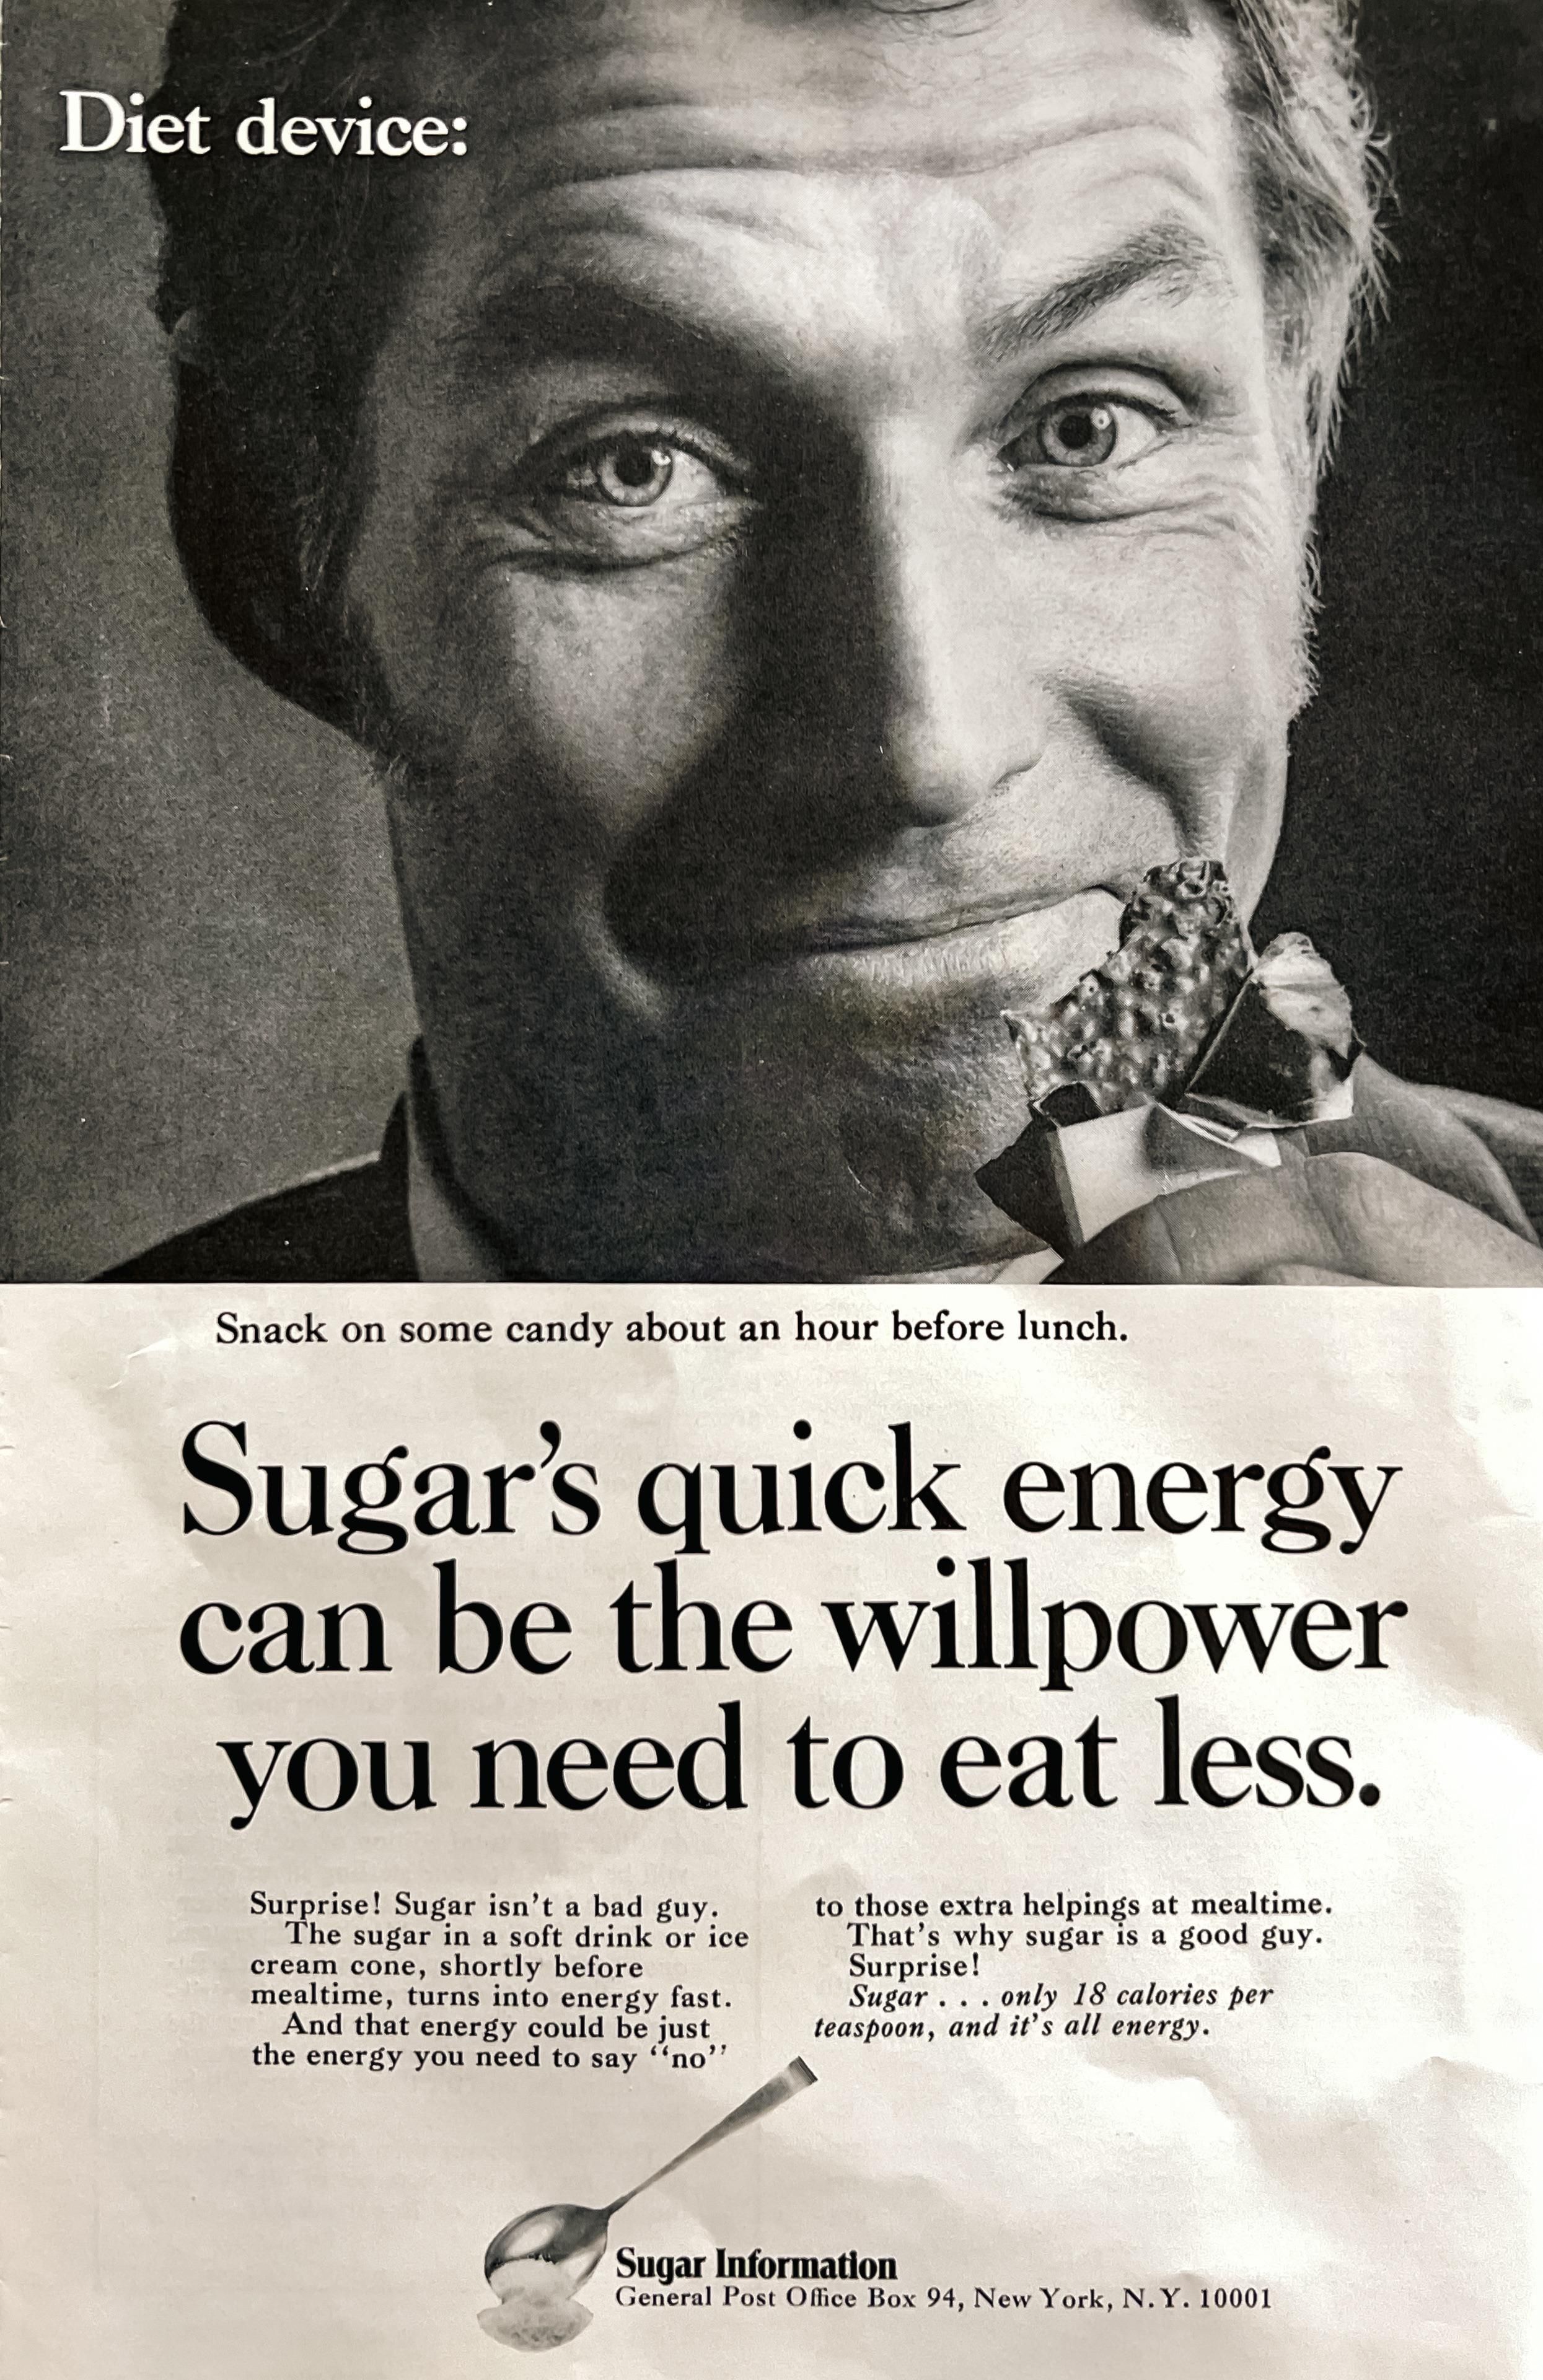 Health Advice from 1971